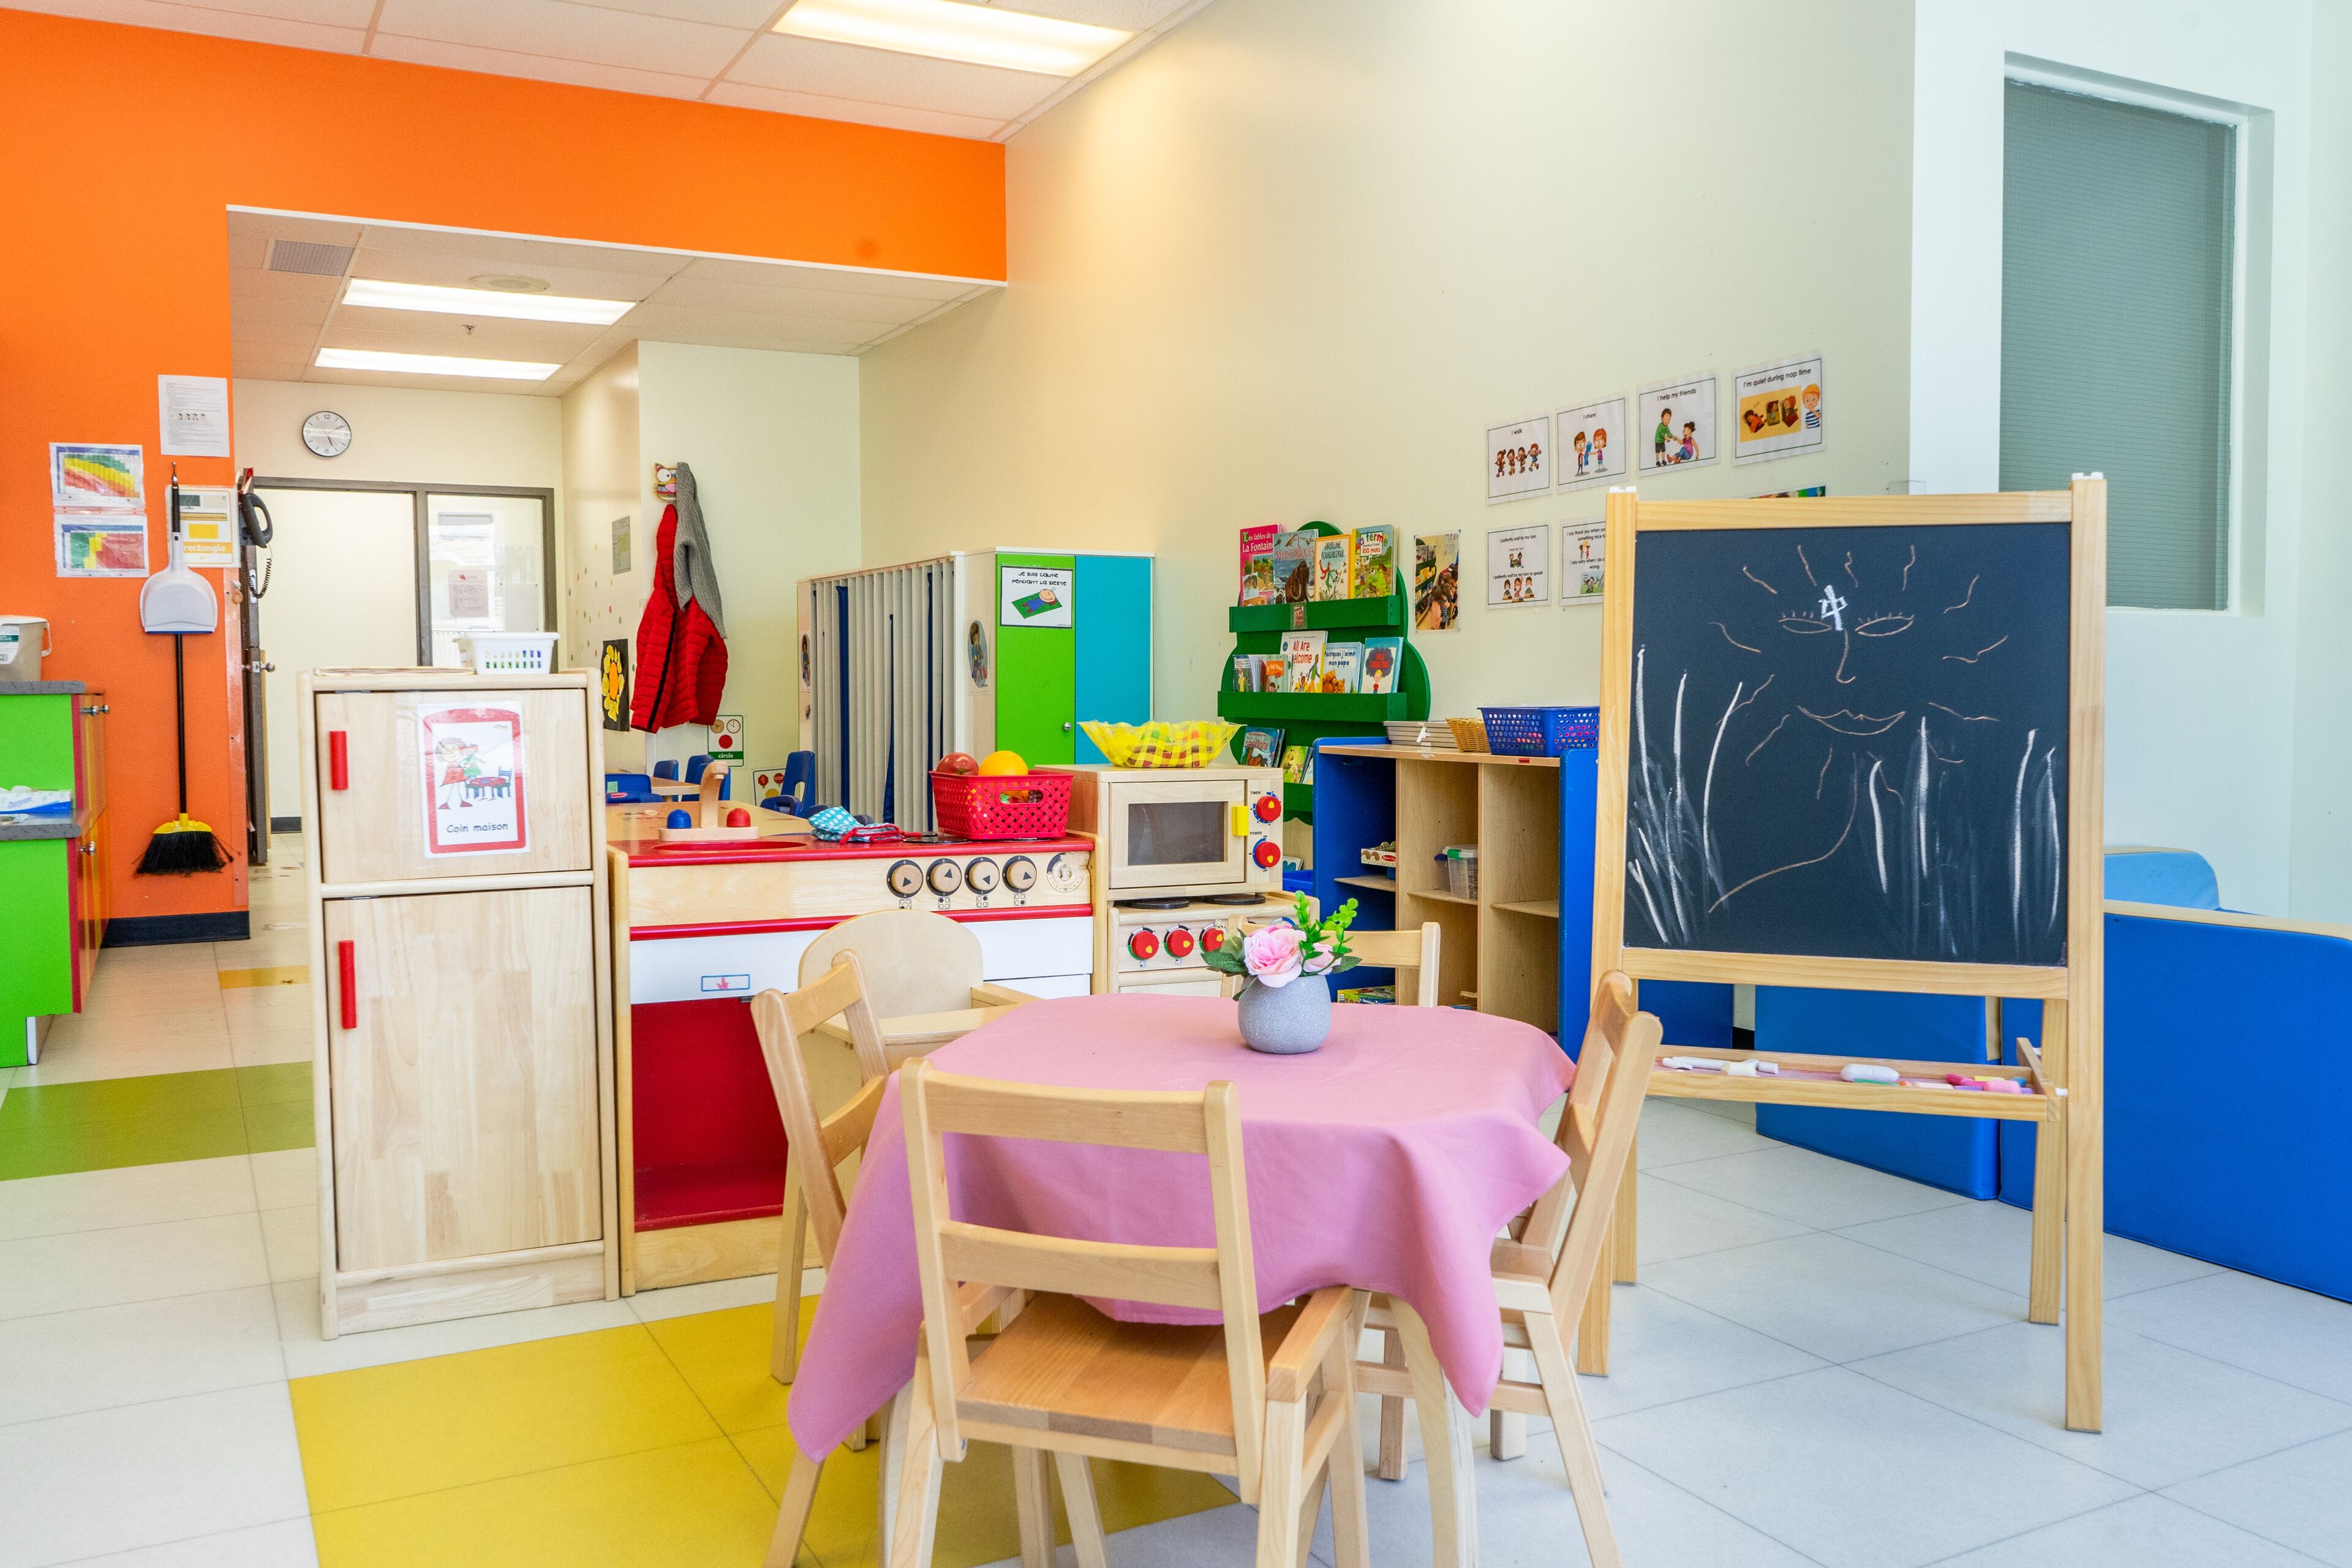 A vibrant kindergarten classroom invites exploration and creativity.